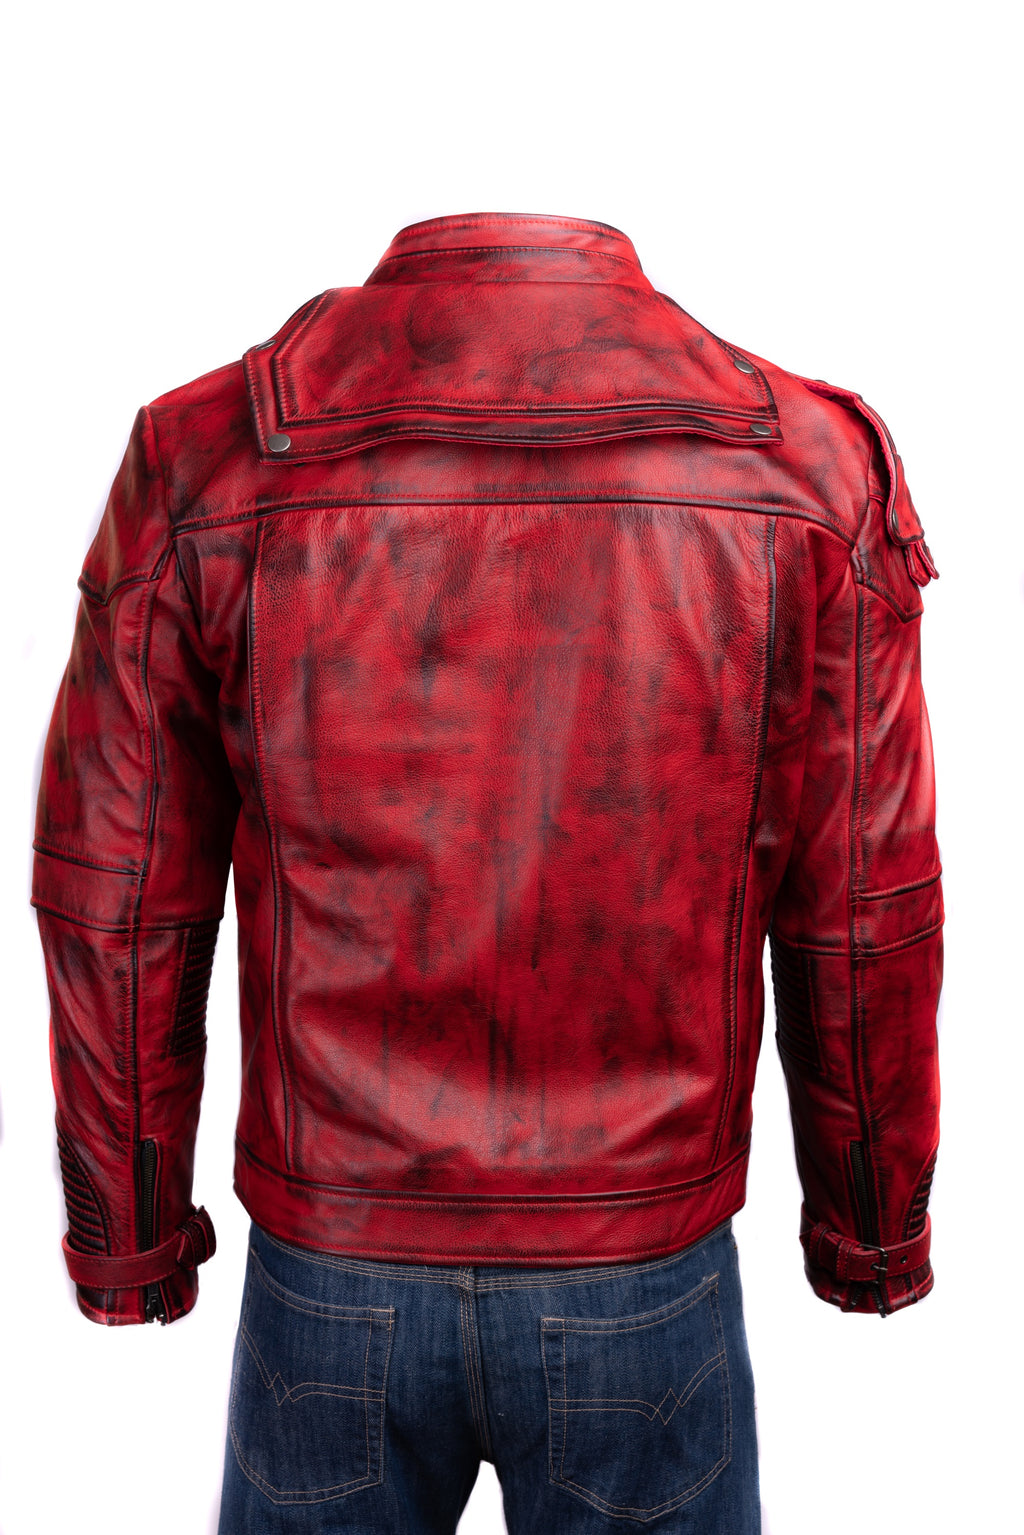 Men's Guardians Style Leather Jacket: The Guardian